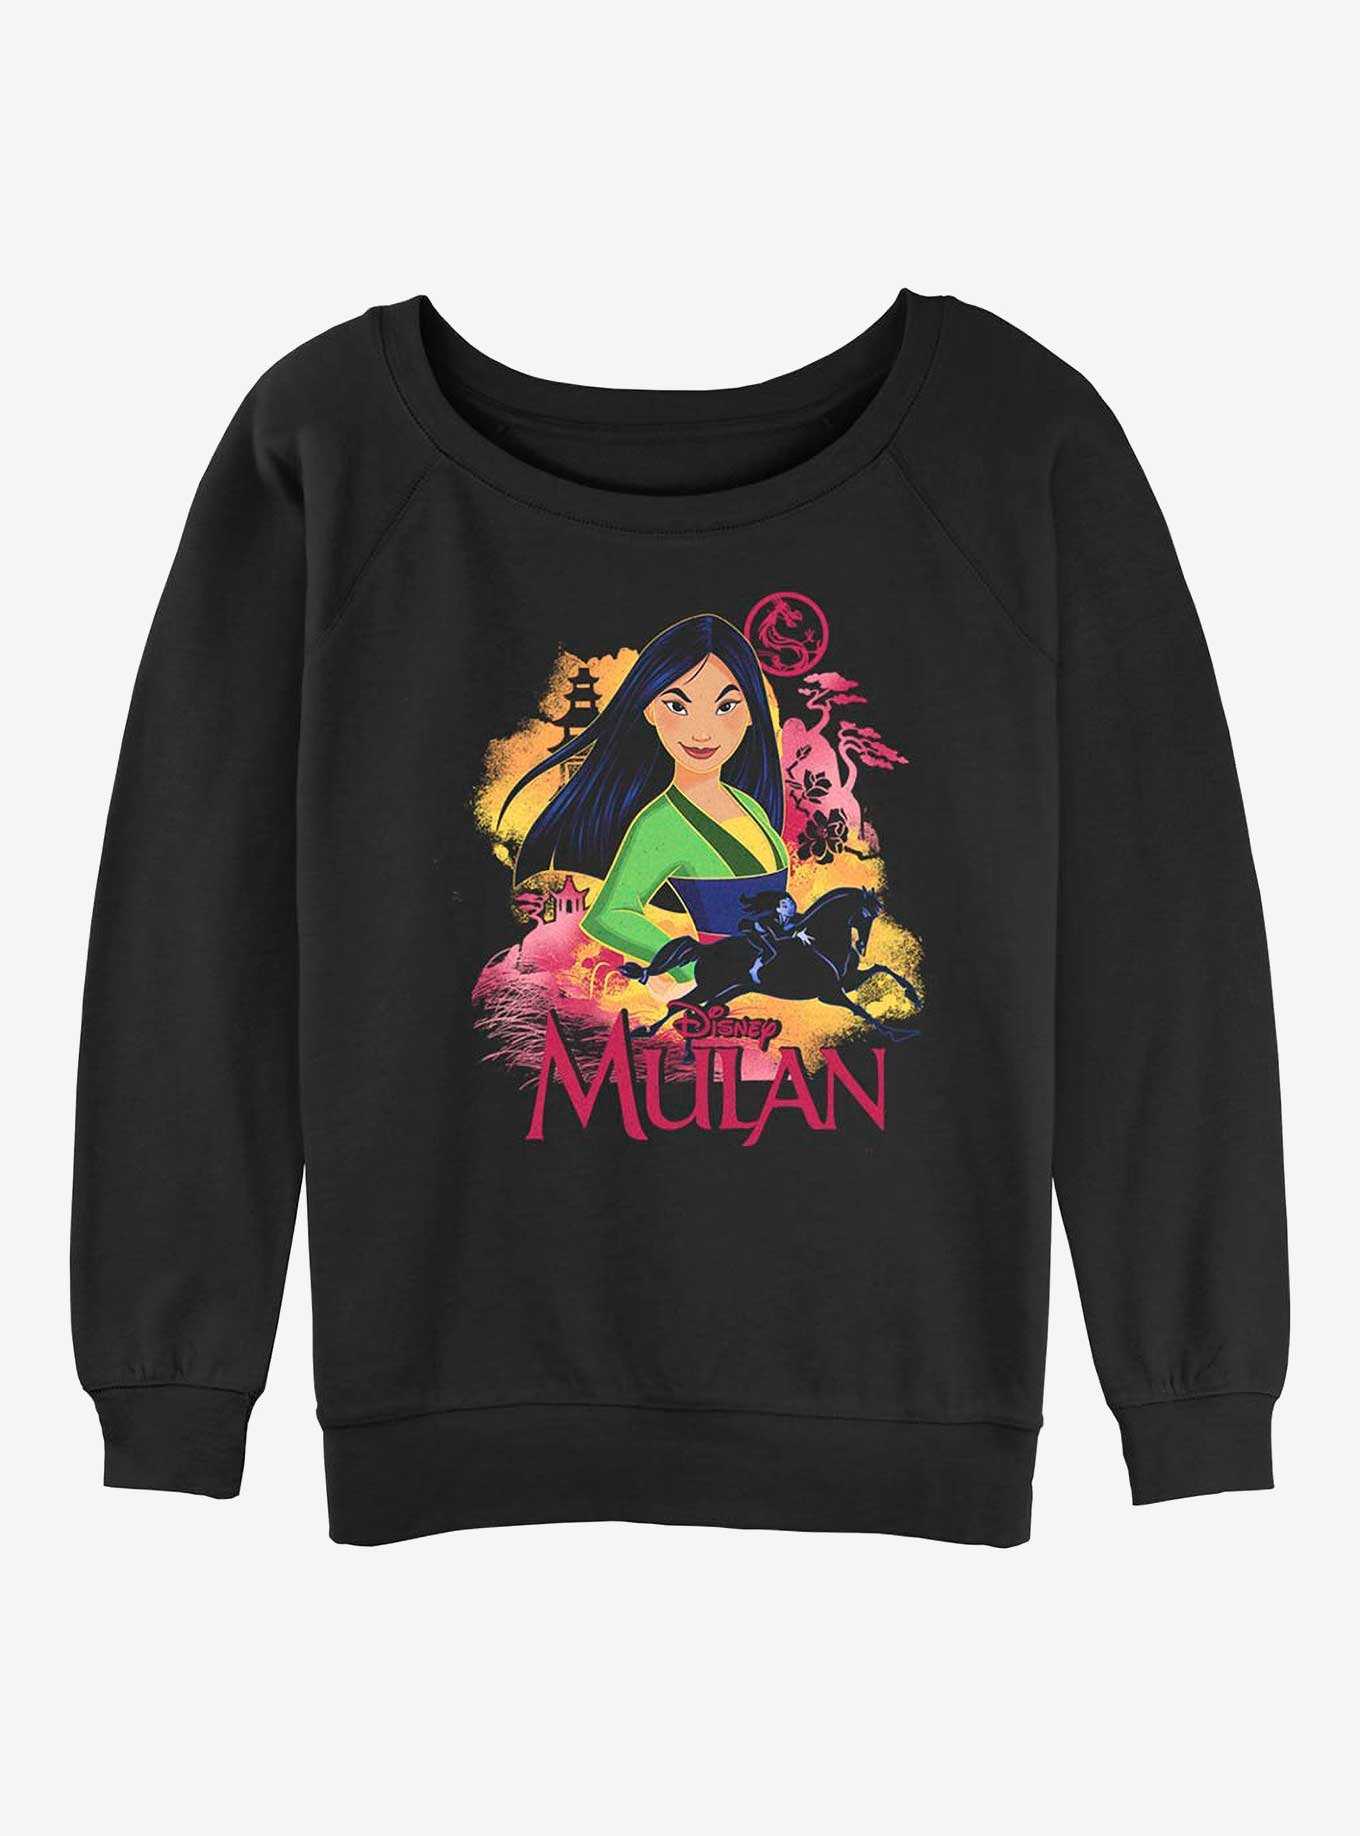 OFFICIAL Mulan Shirts | Merchandise & Hot Topic